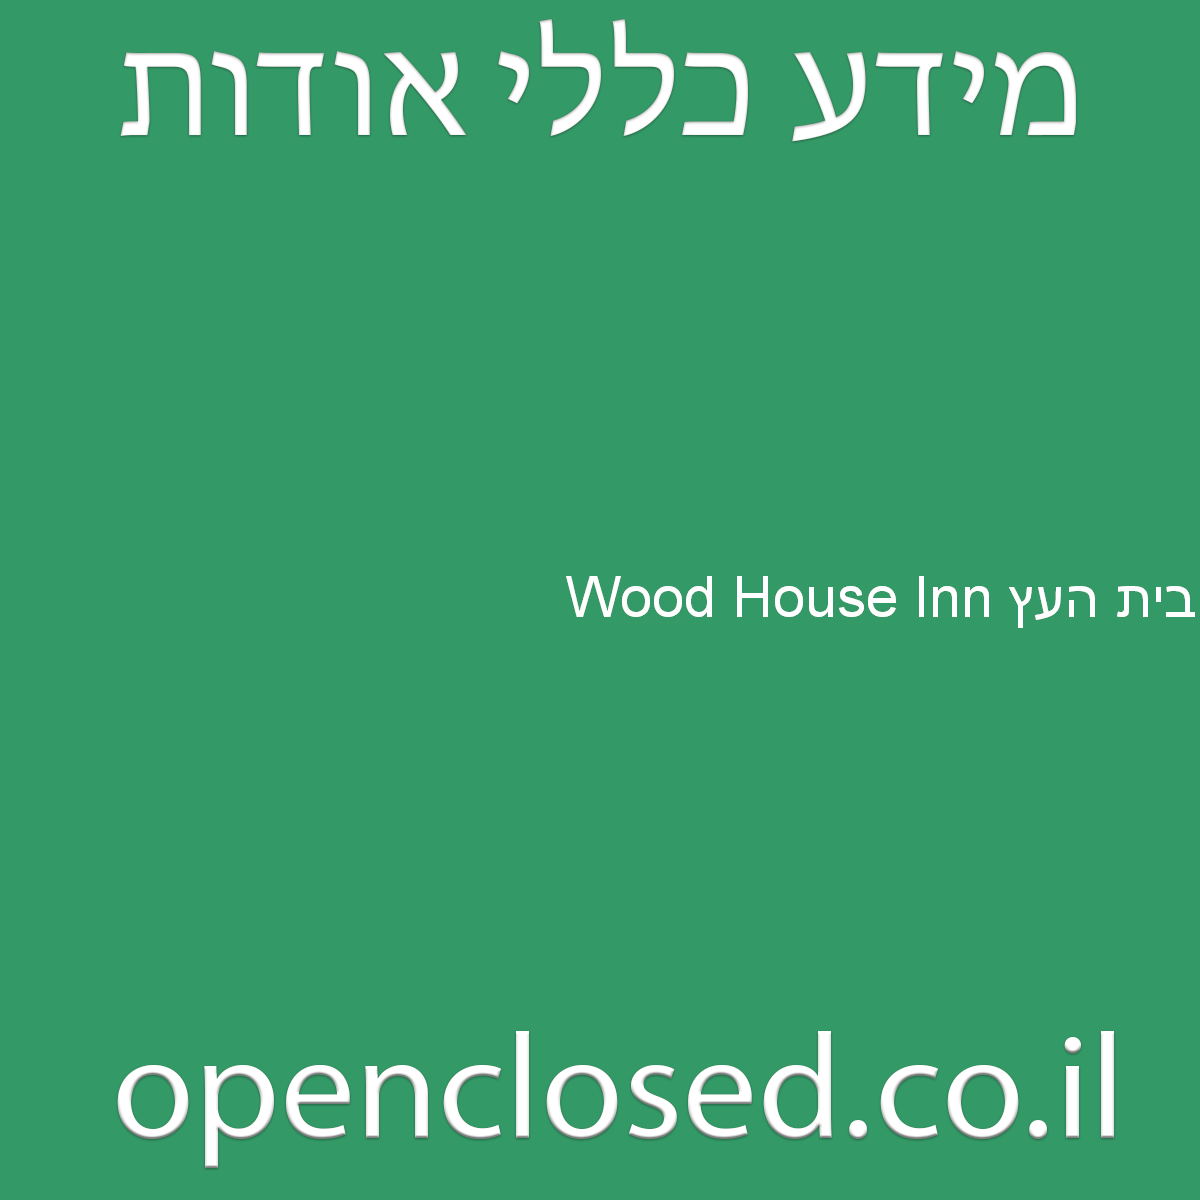 Wood House Inn בית העץ